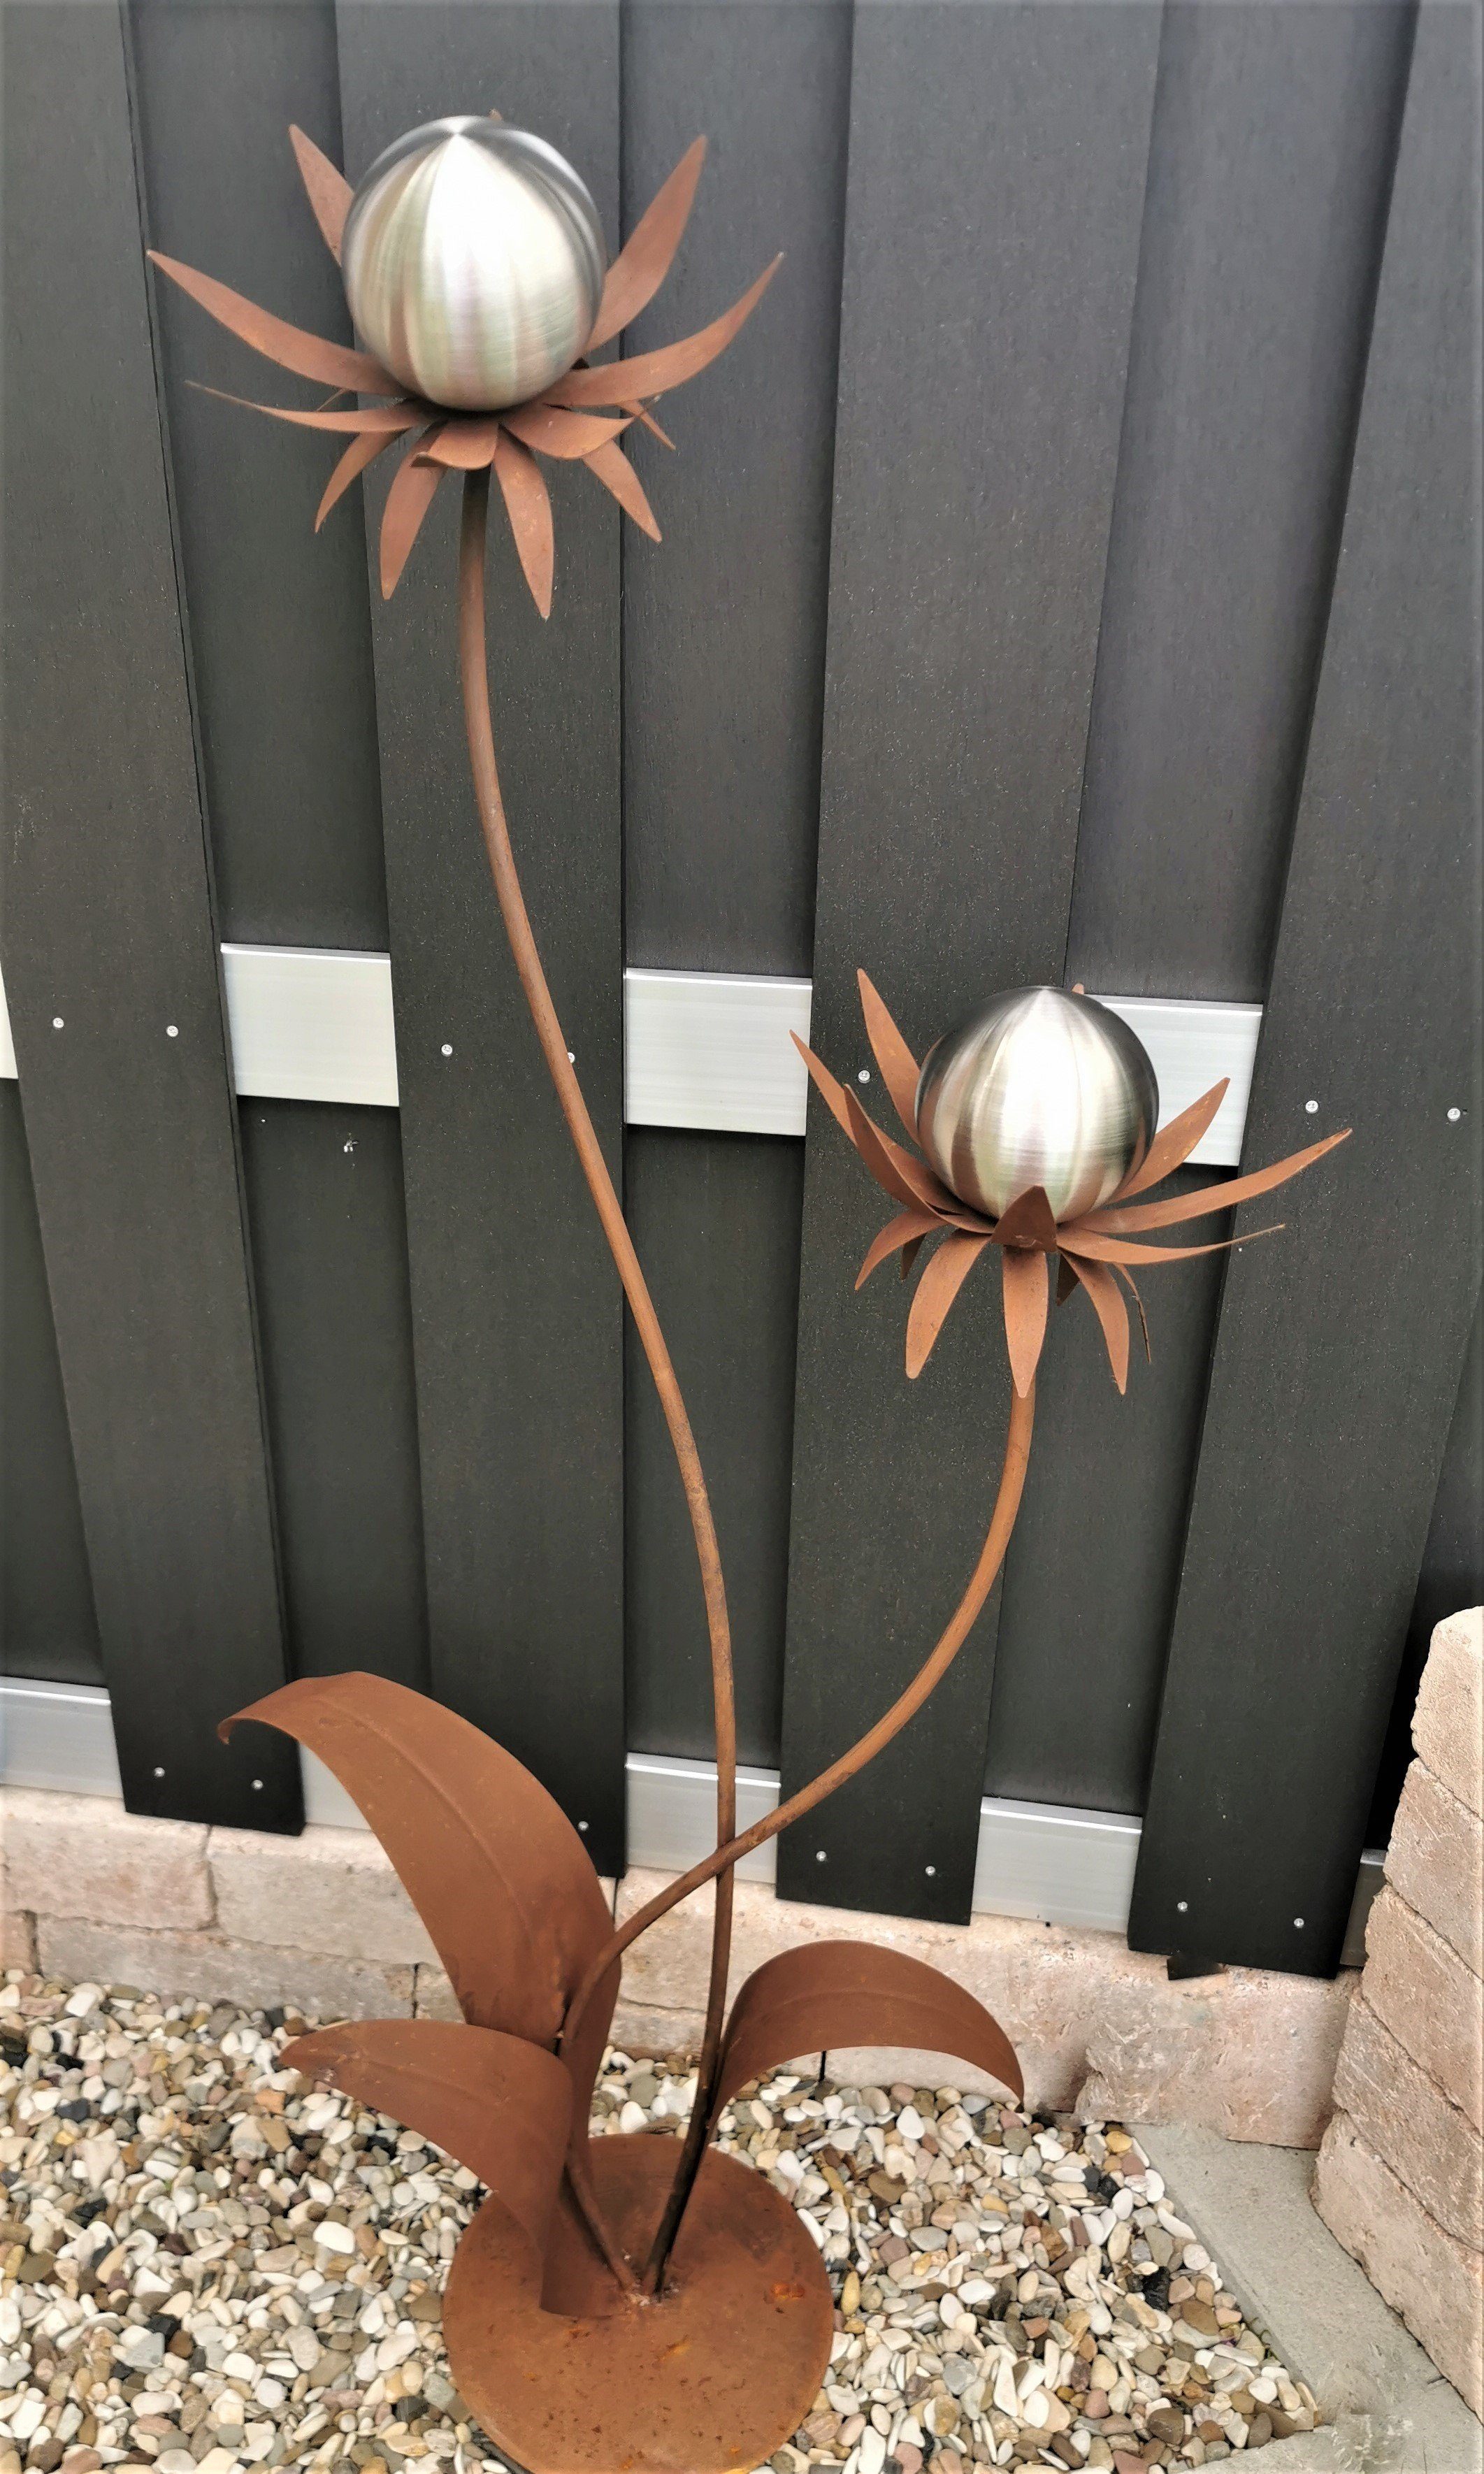 Jürgen Bocker Garten-Ambiente Gartenstecker Skulptur Blume Milano Corten 120 cm Kugel Edelstahl matt gebürstet Cortenstahl Garten